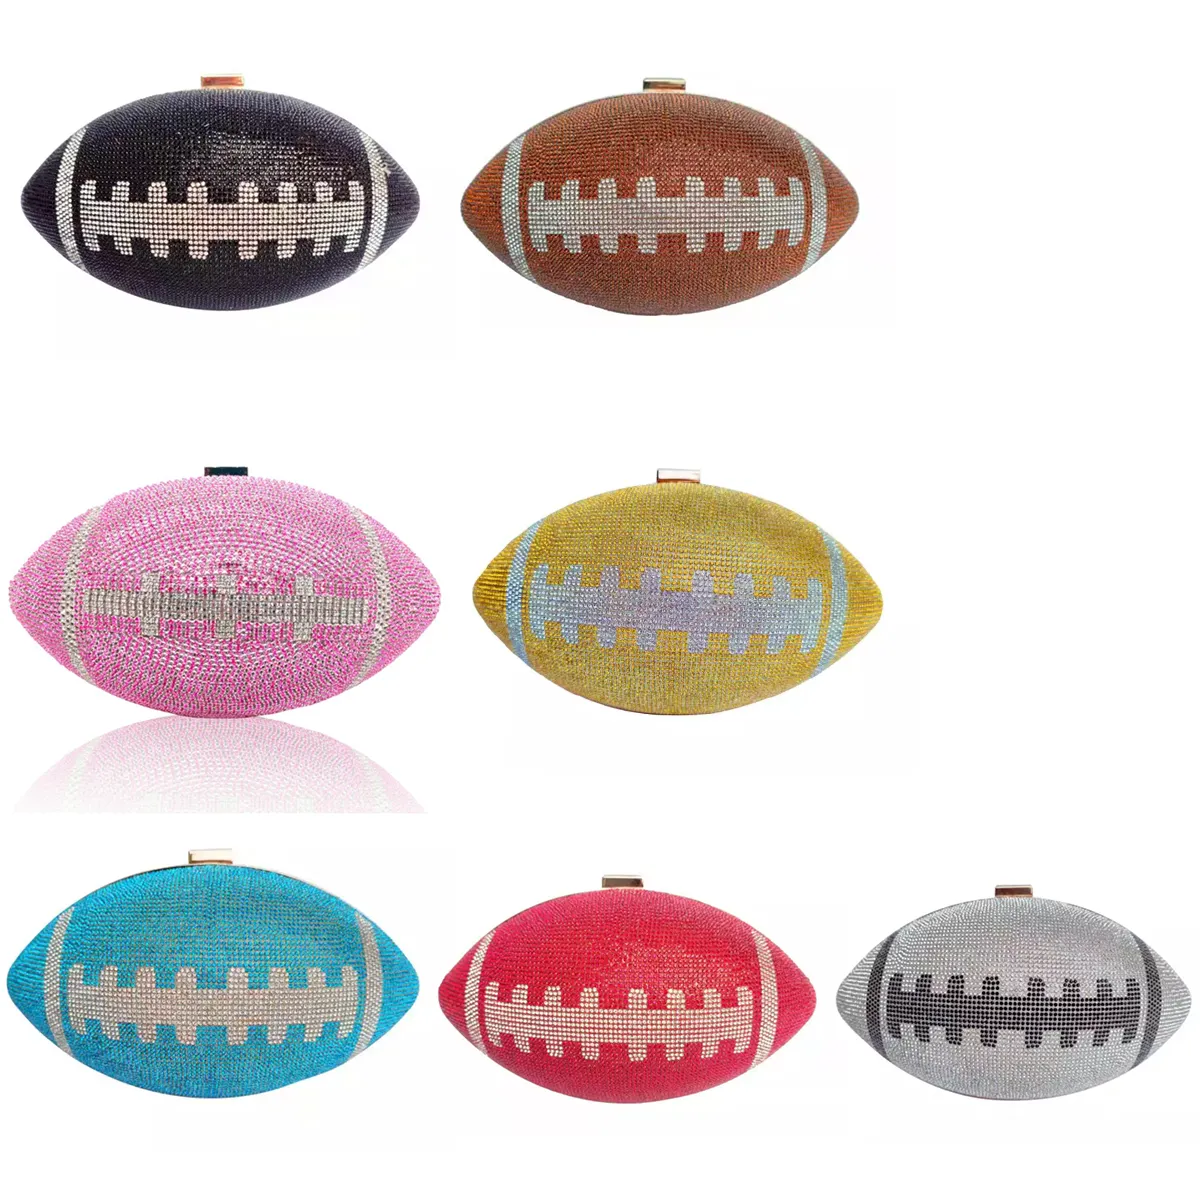 New Rhinestone American football round ball purse stone bling diamond crystal evening clutch handbags ladies womens purses